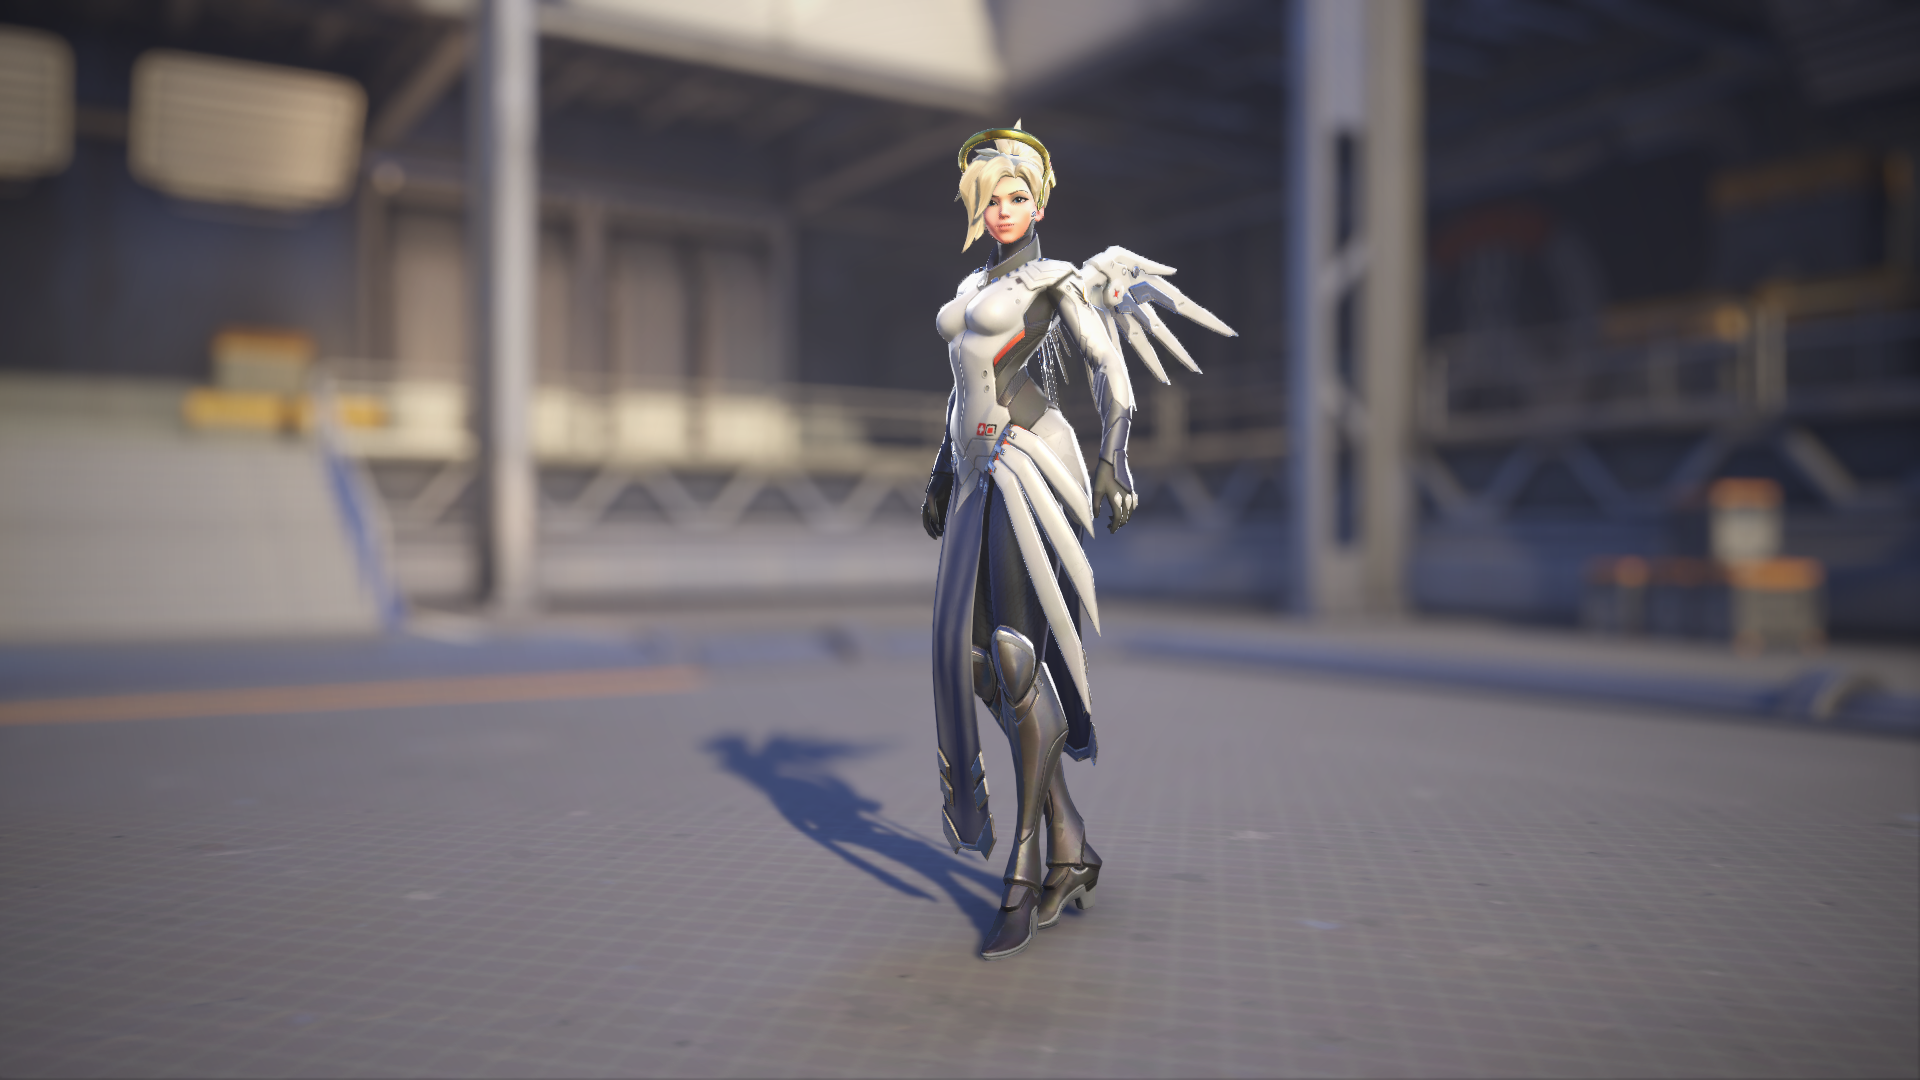 Mercy models her Mist skin in Overwatch 2.